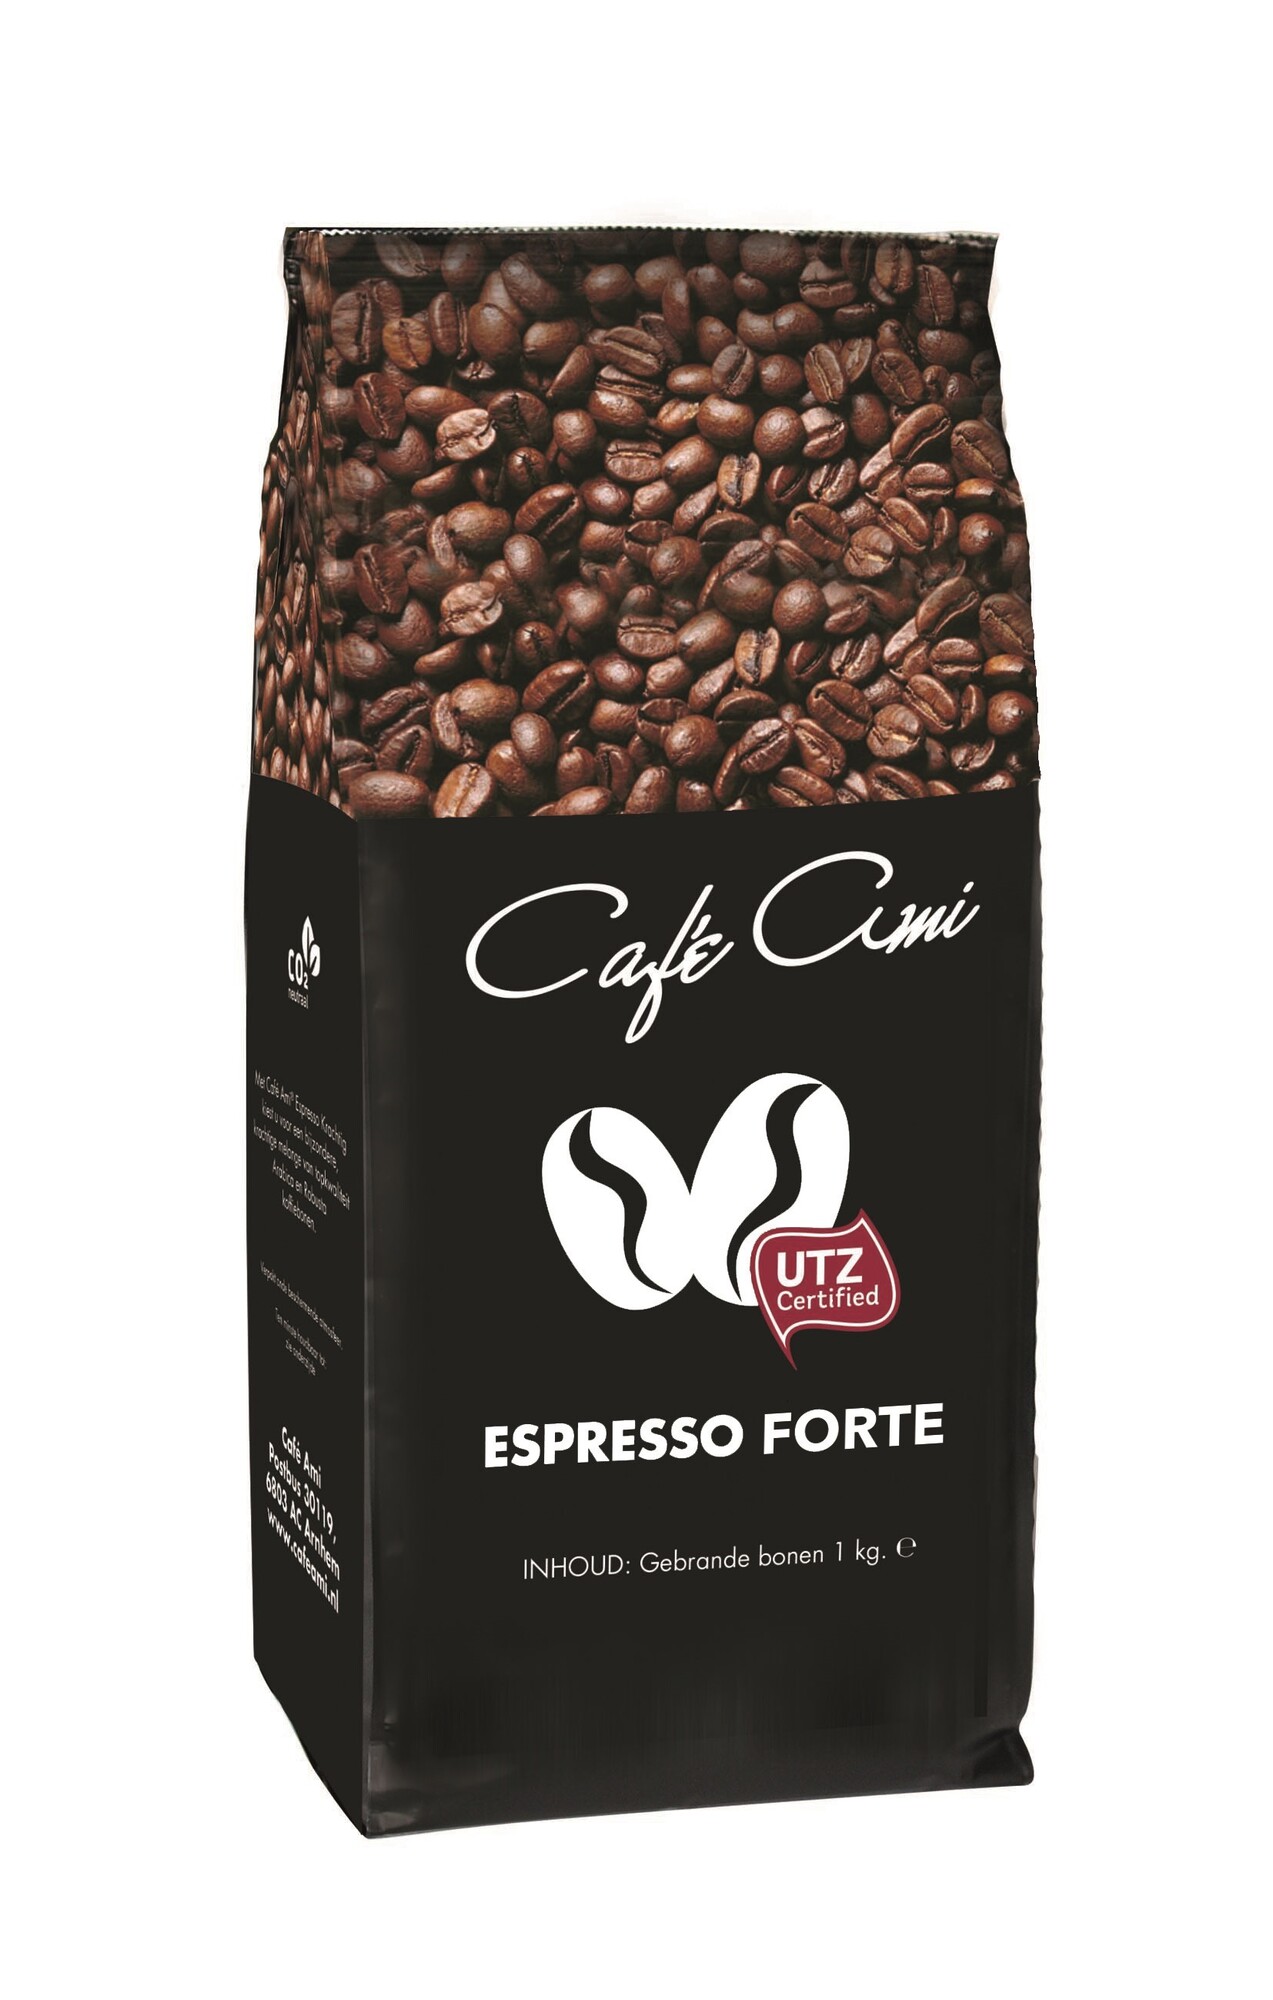 74017 Espresso forte koffiebonen utc 4x1 kg